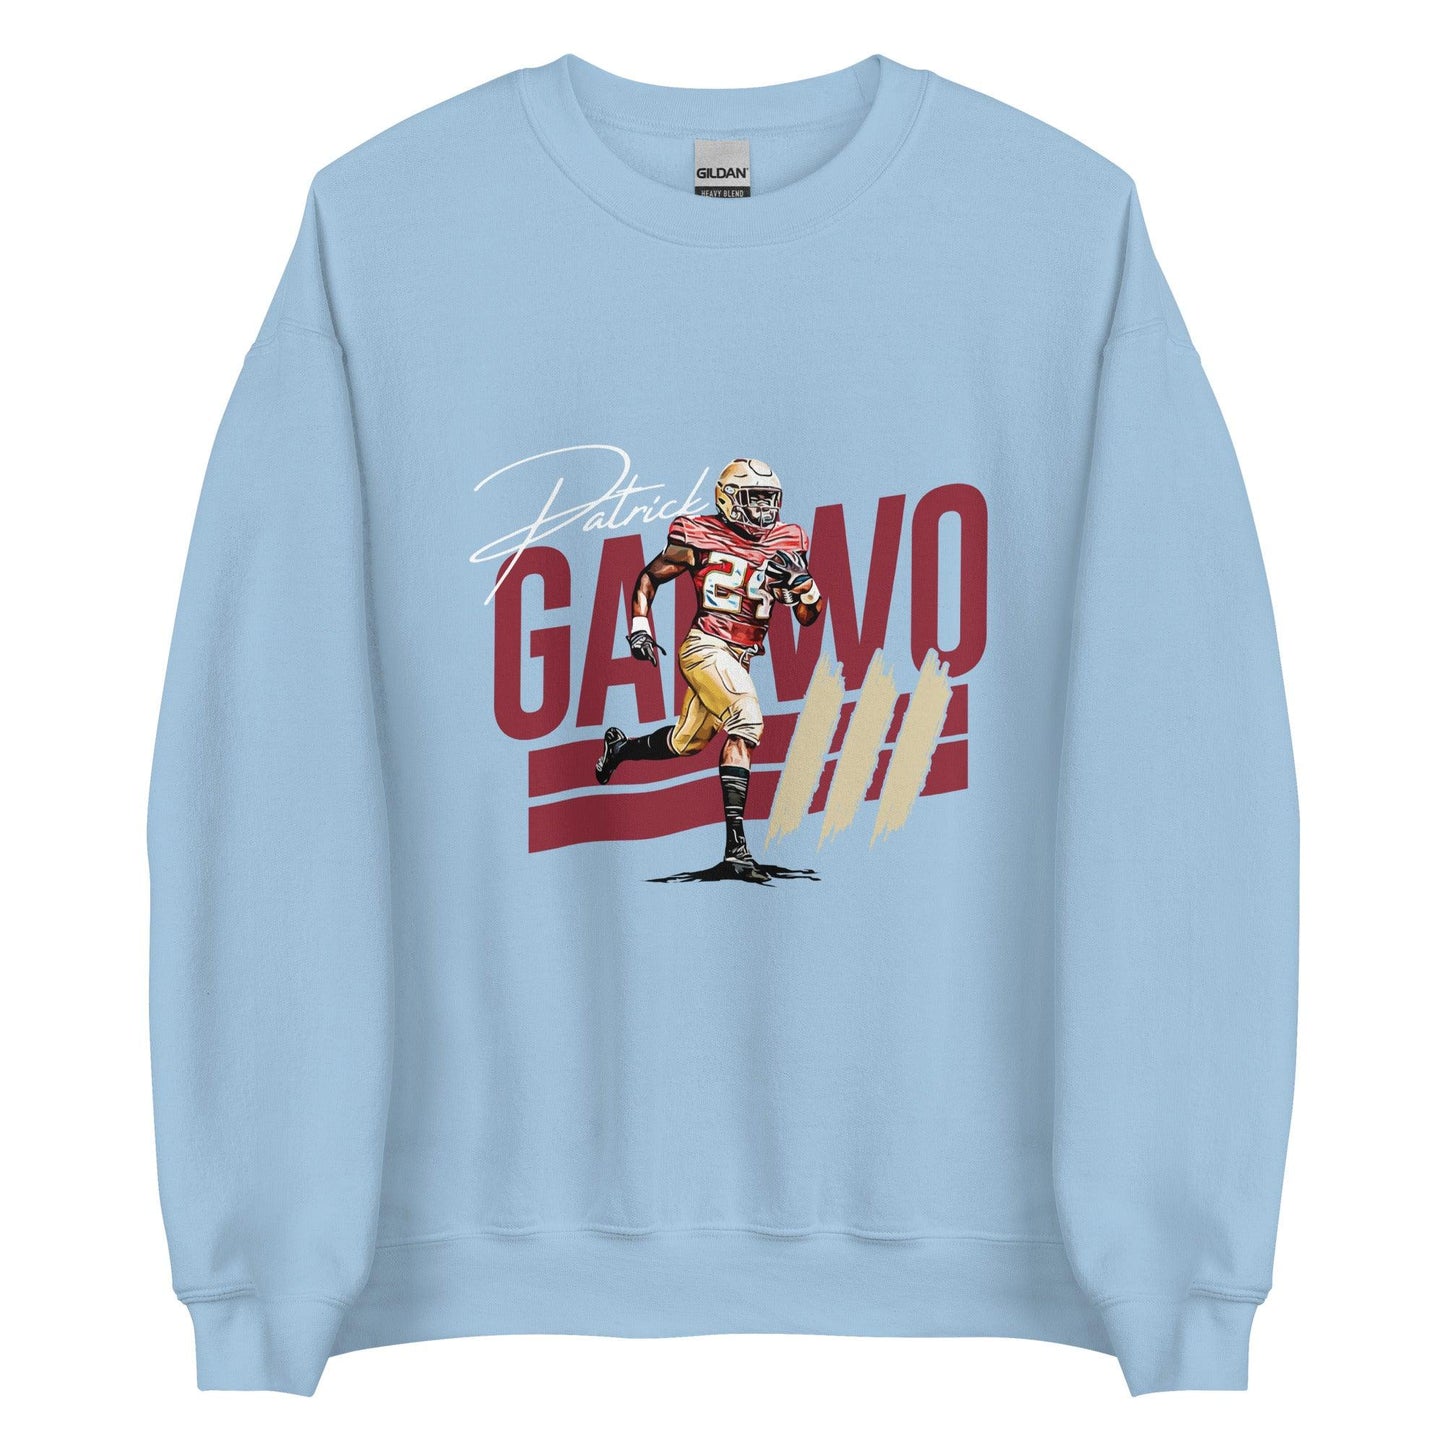 Patrick Garwo III “essential“ Sweatshirt - Fan Arch